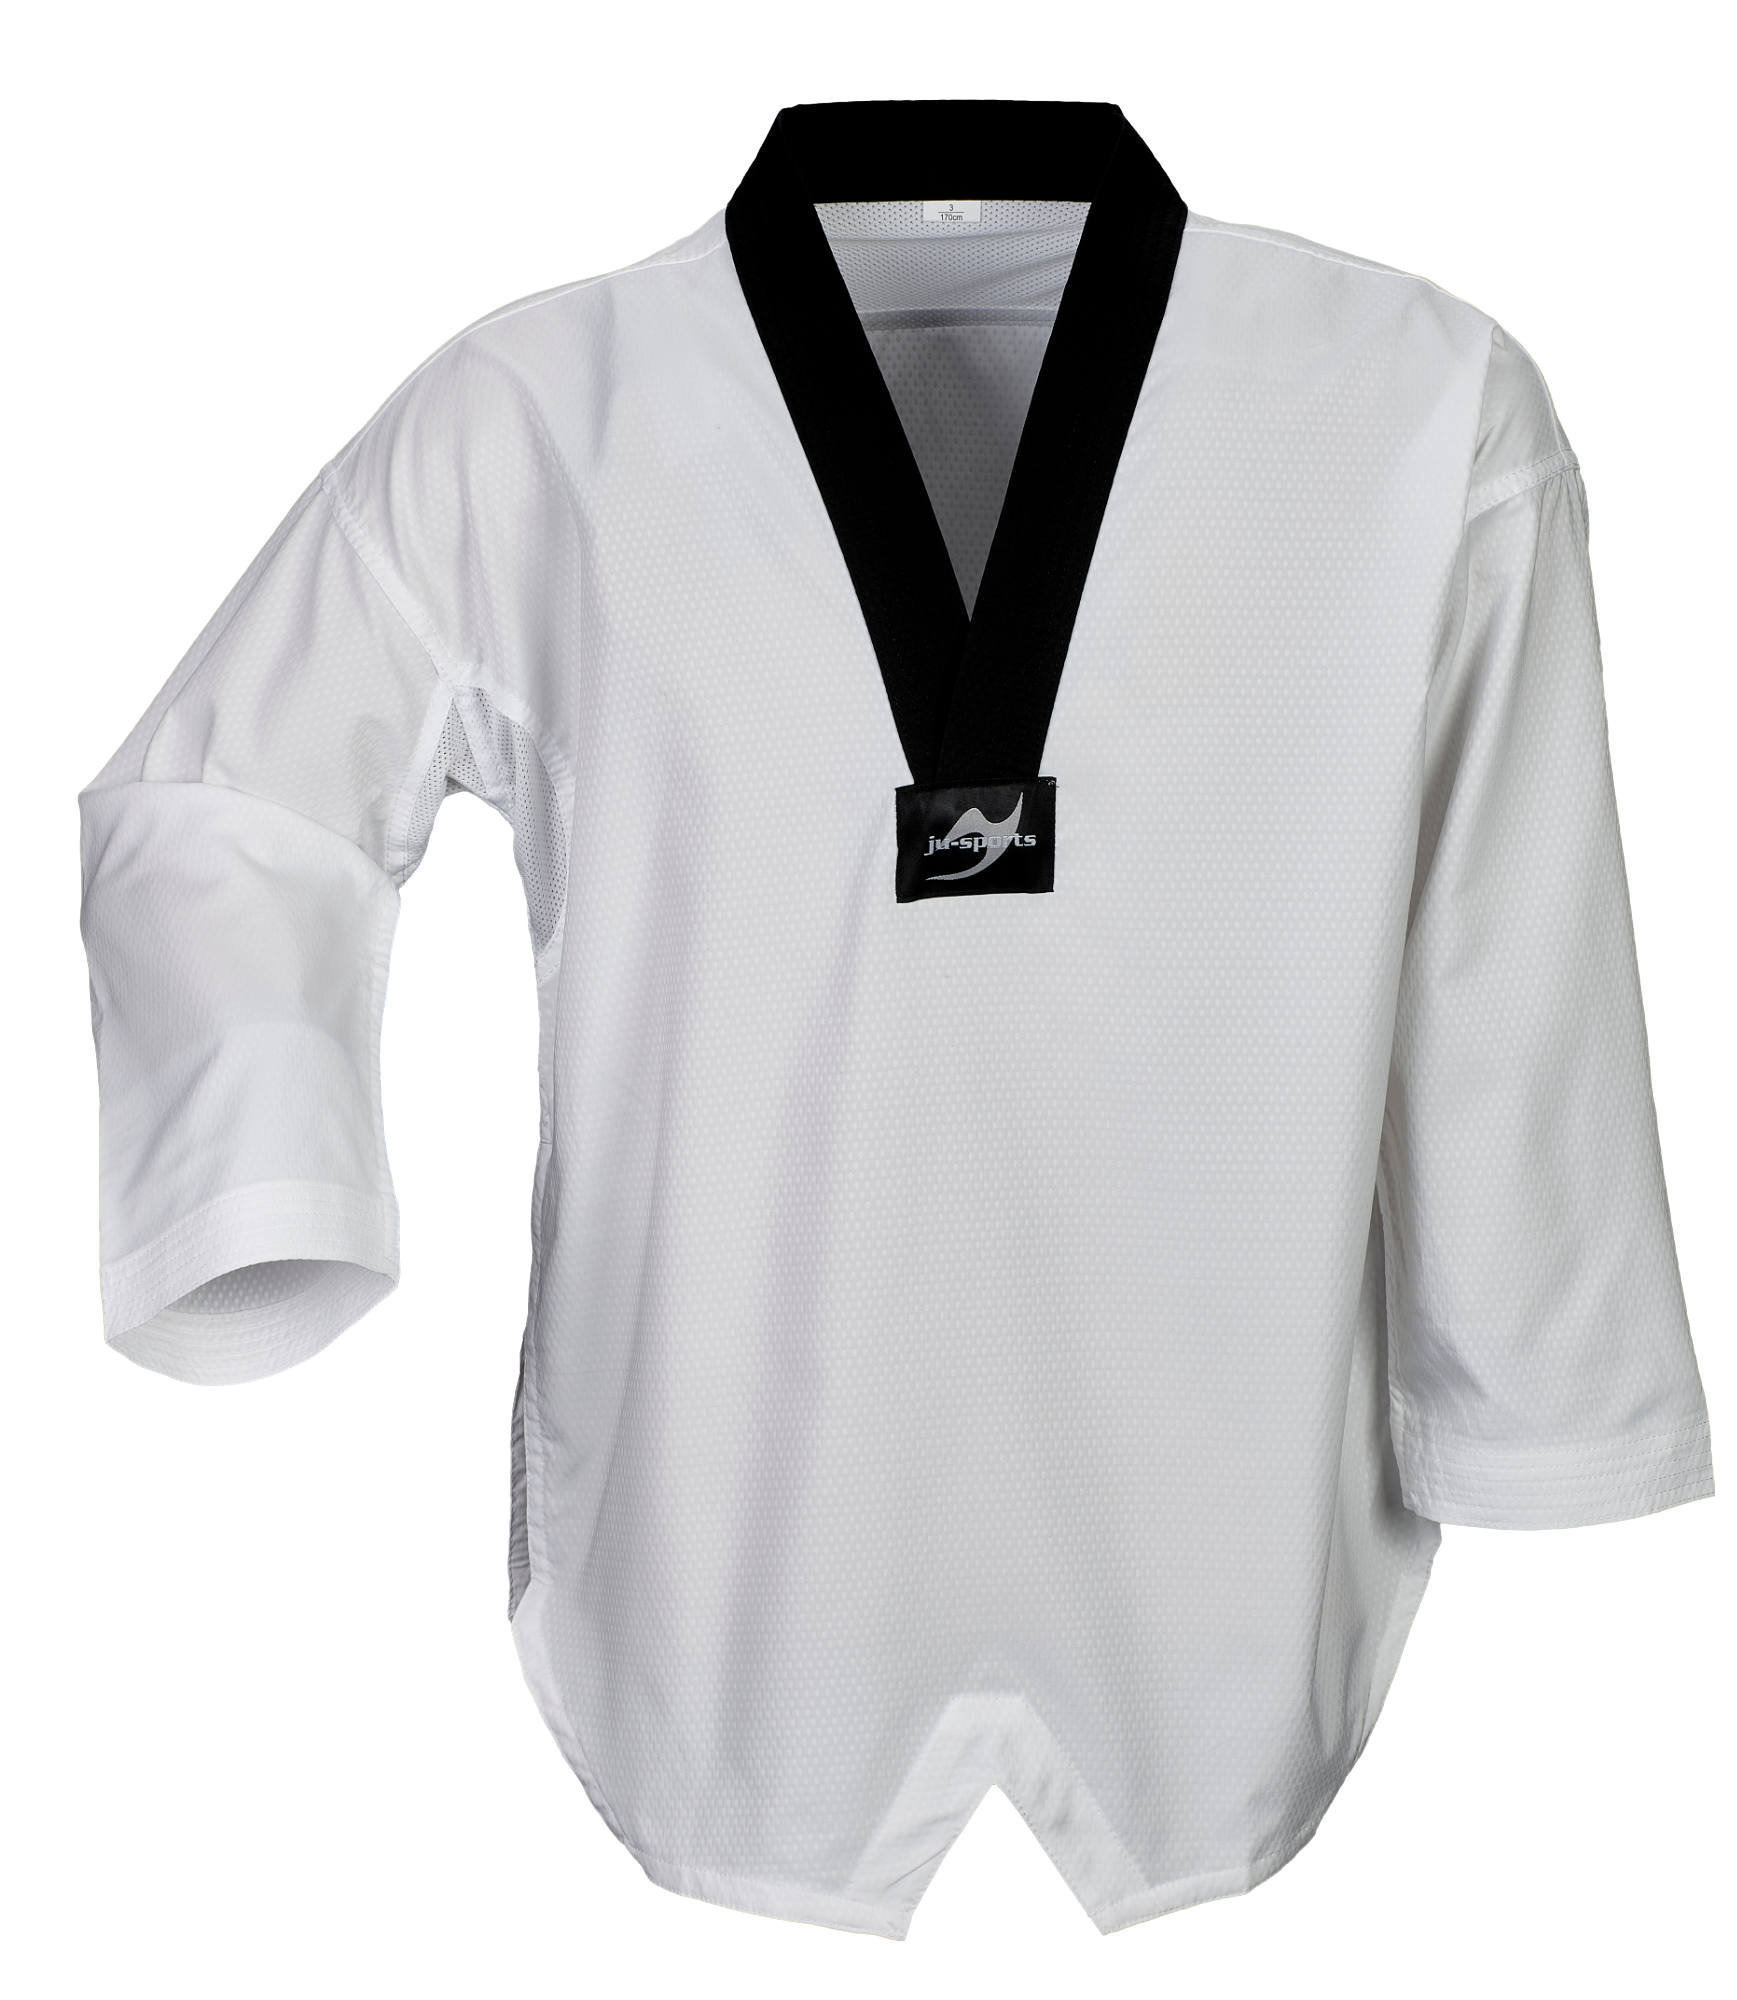 Taekwondo dobok performace pro, black collar